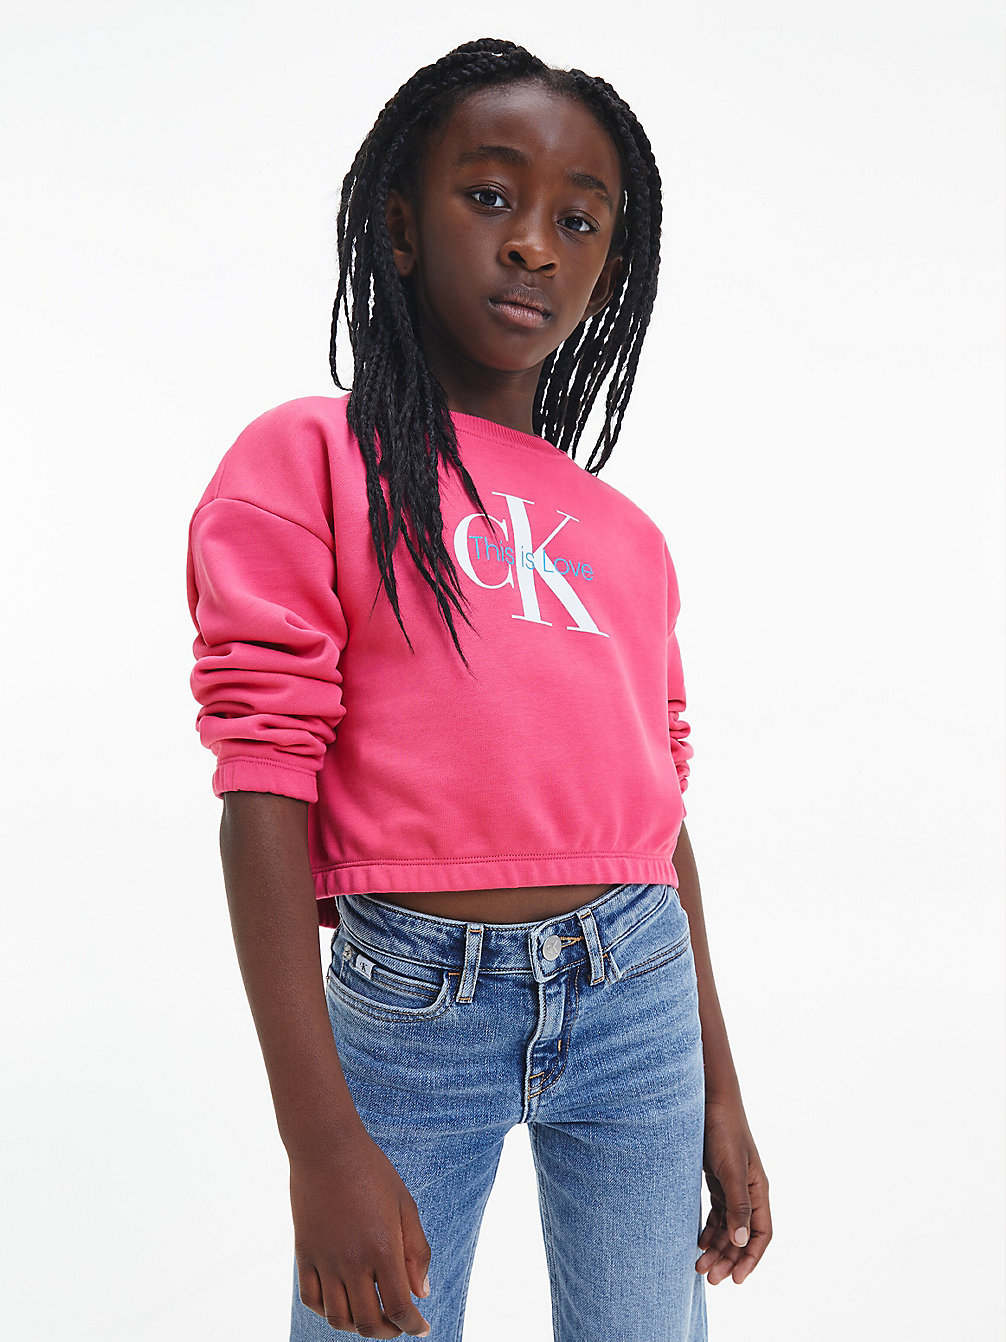 PINK FLAMBE Boxy Cropped Sweatshirt - Pride undefined girls Calvin Klein